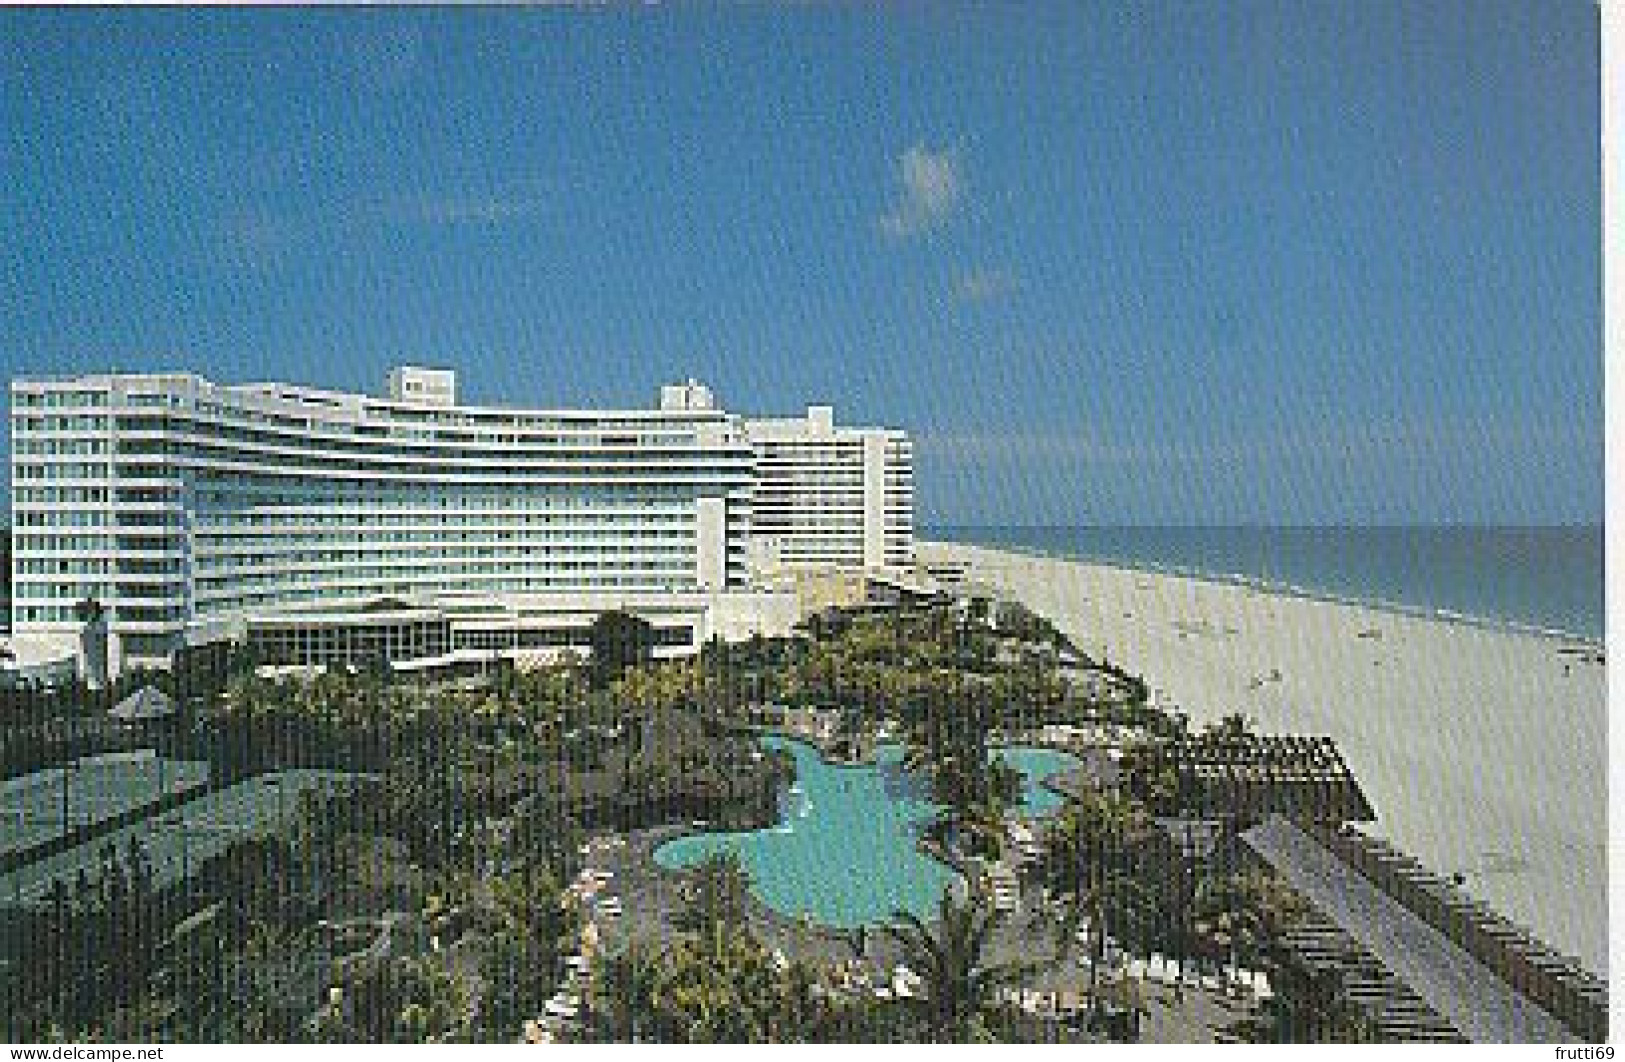 AK 186407 USA - Florida - Miami Beach - Fountainbleau Hilton - Miami Beach